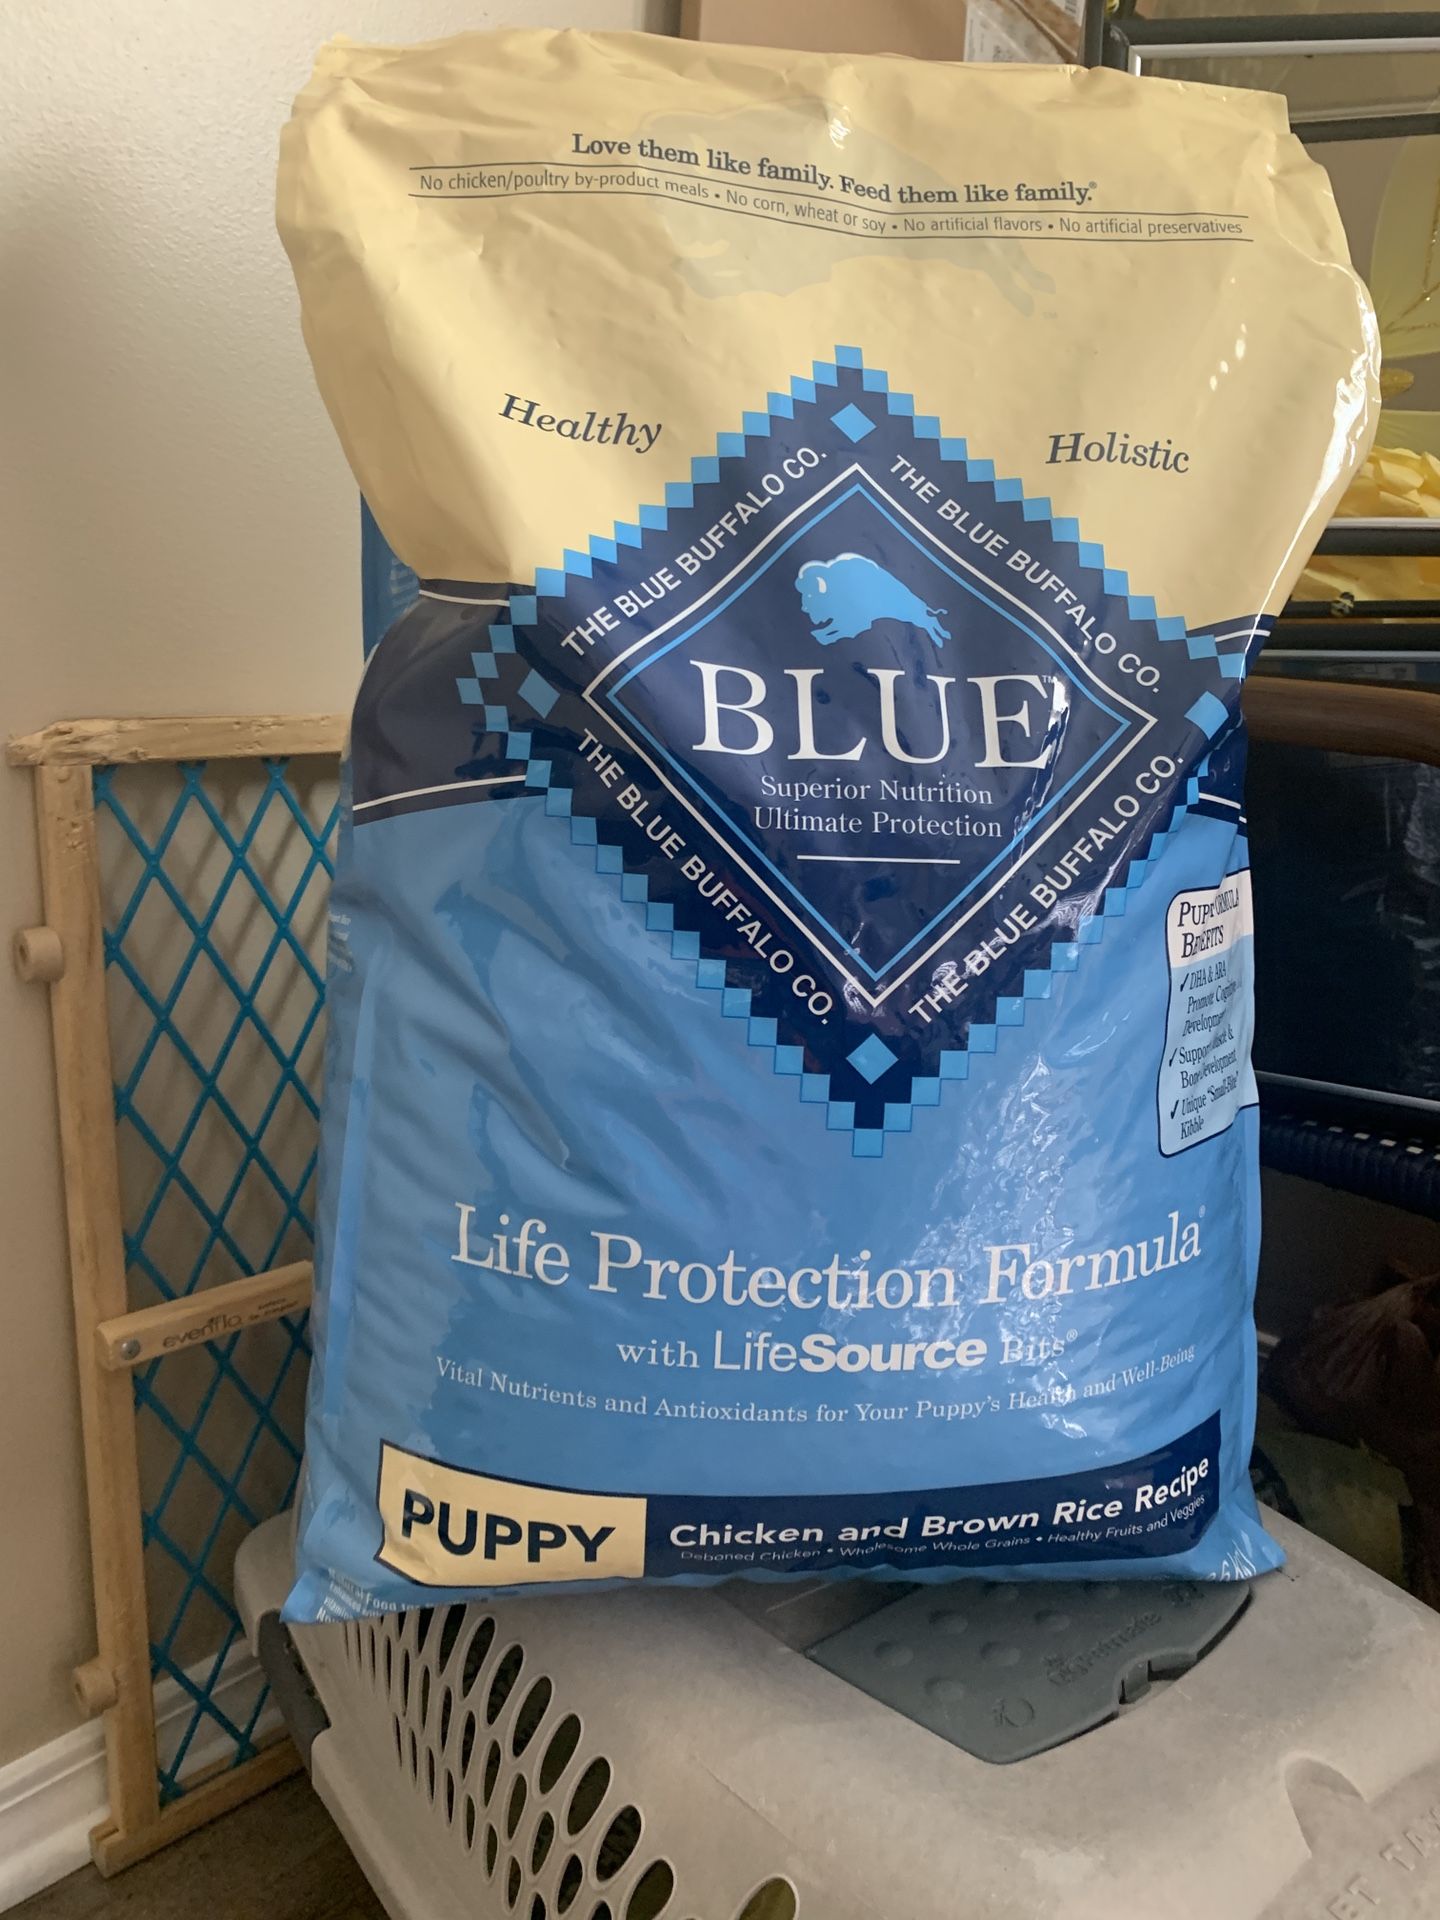 Brand new unopened Blue buffalo puppy food